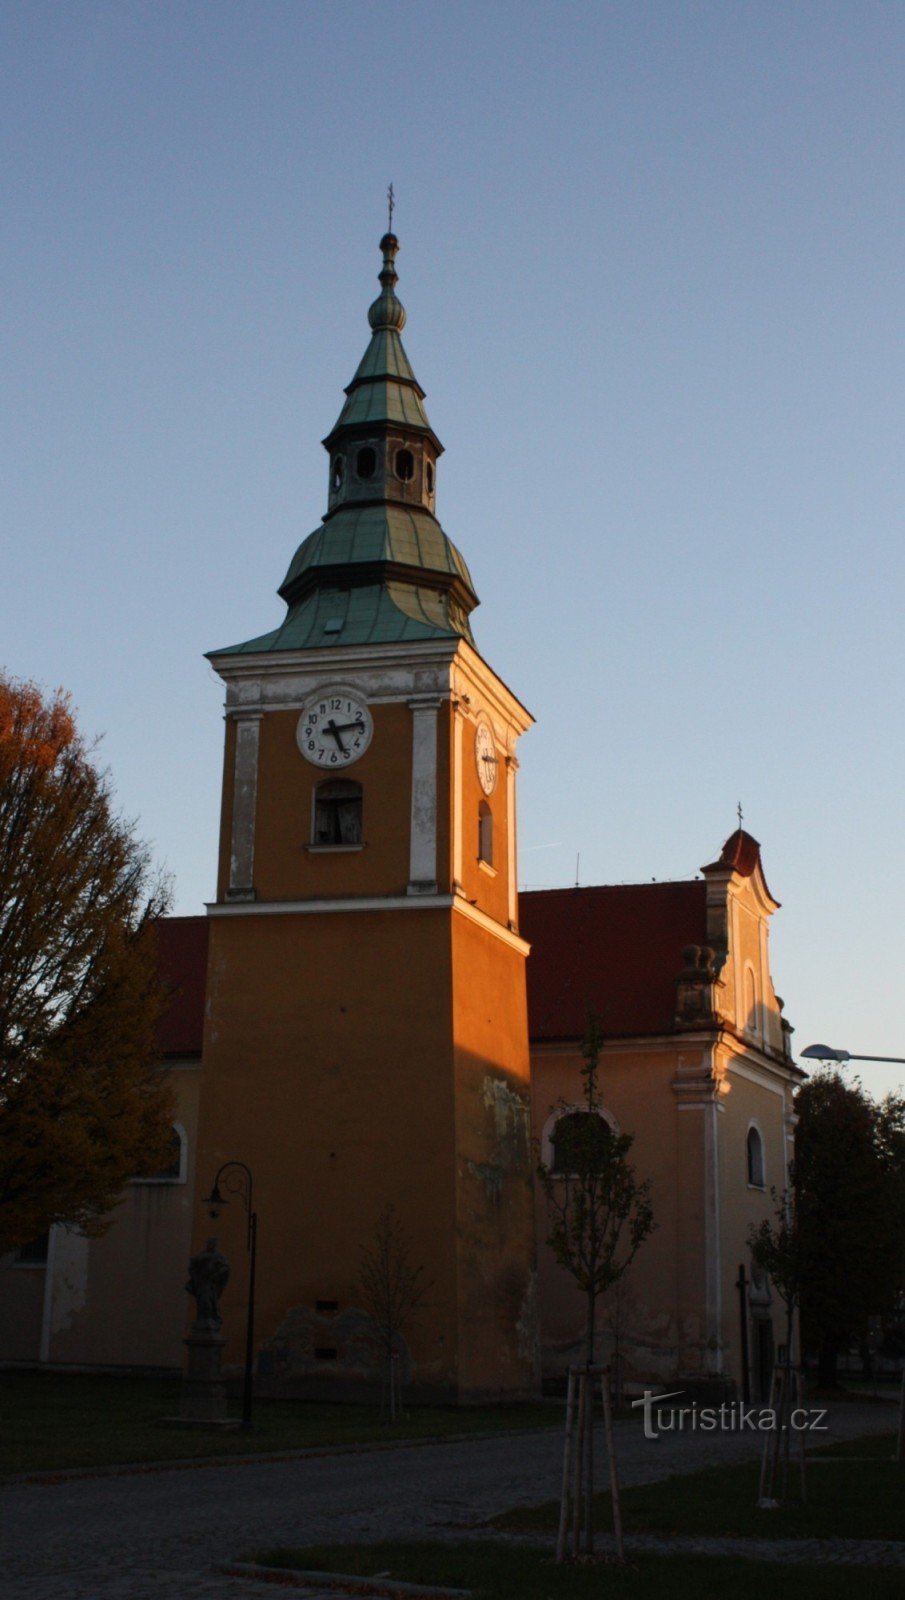 Parish Church of St. Mary Magdalene in Němčice nad Hanou